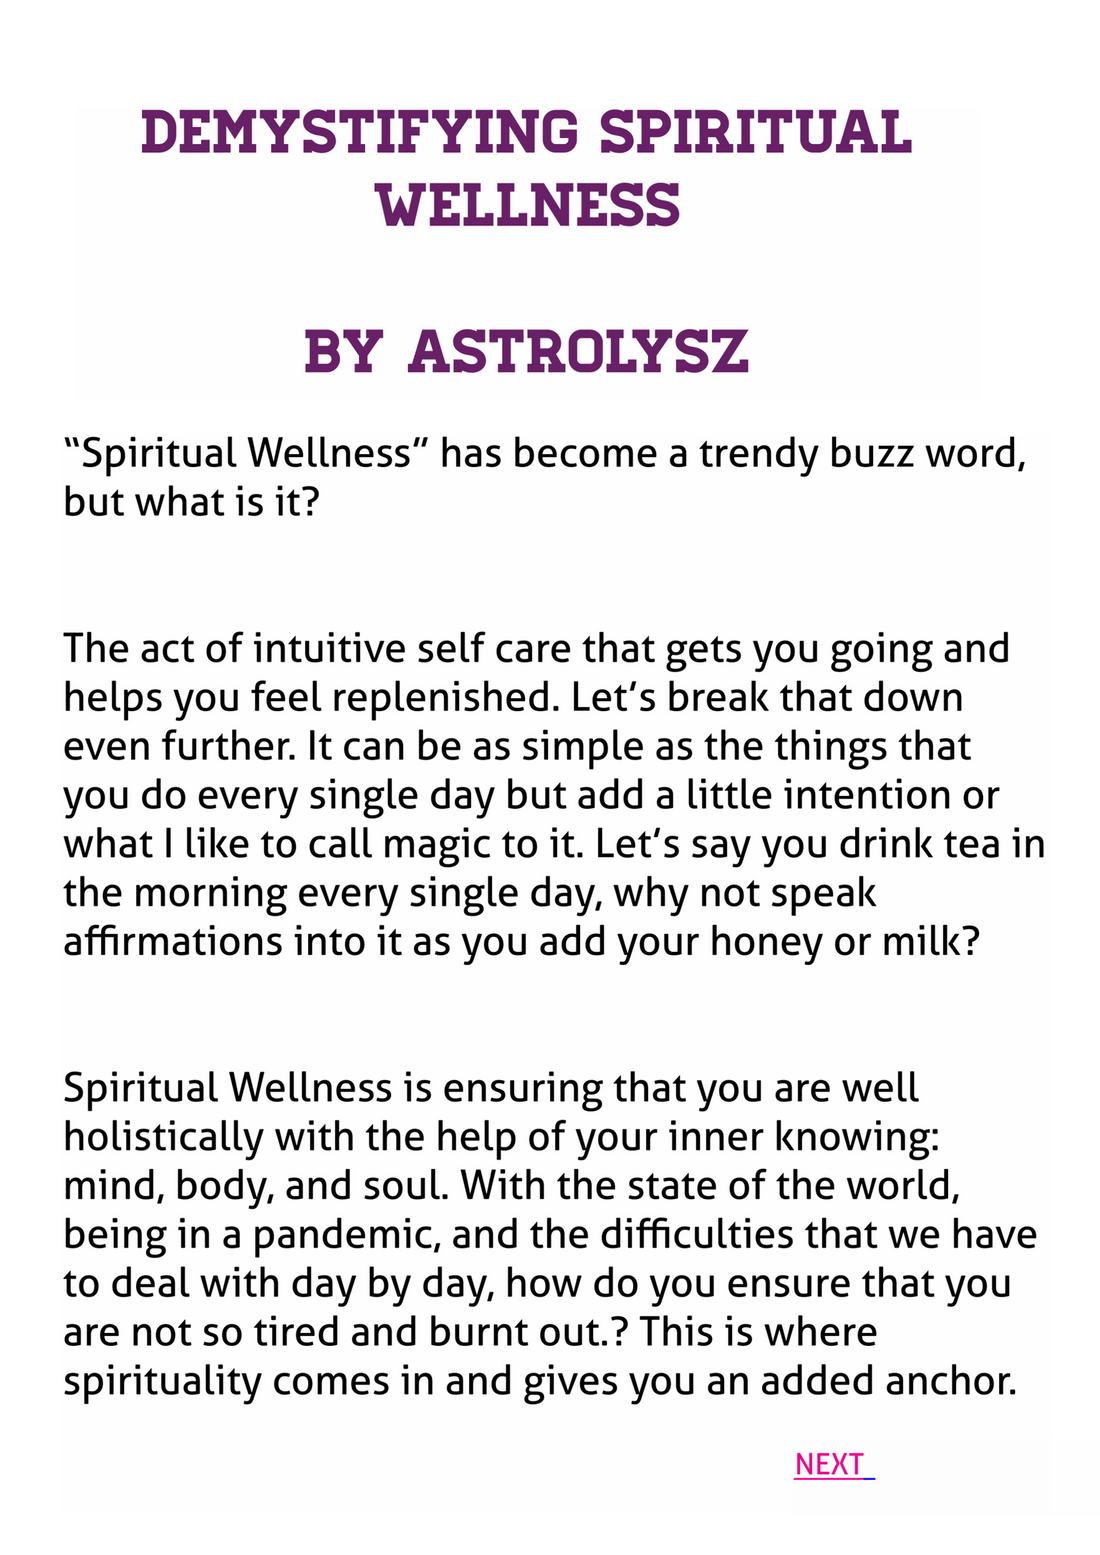 NEW ARTICLE: Demistifying spirituality